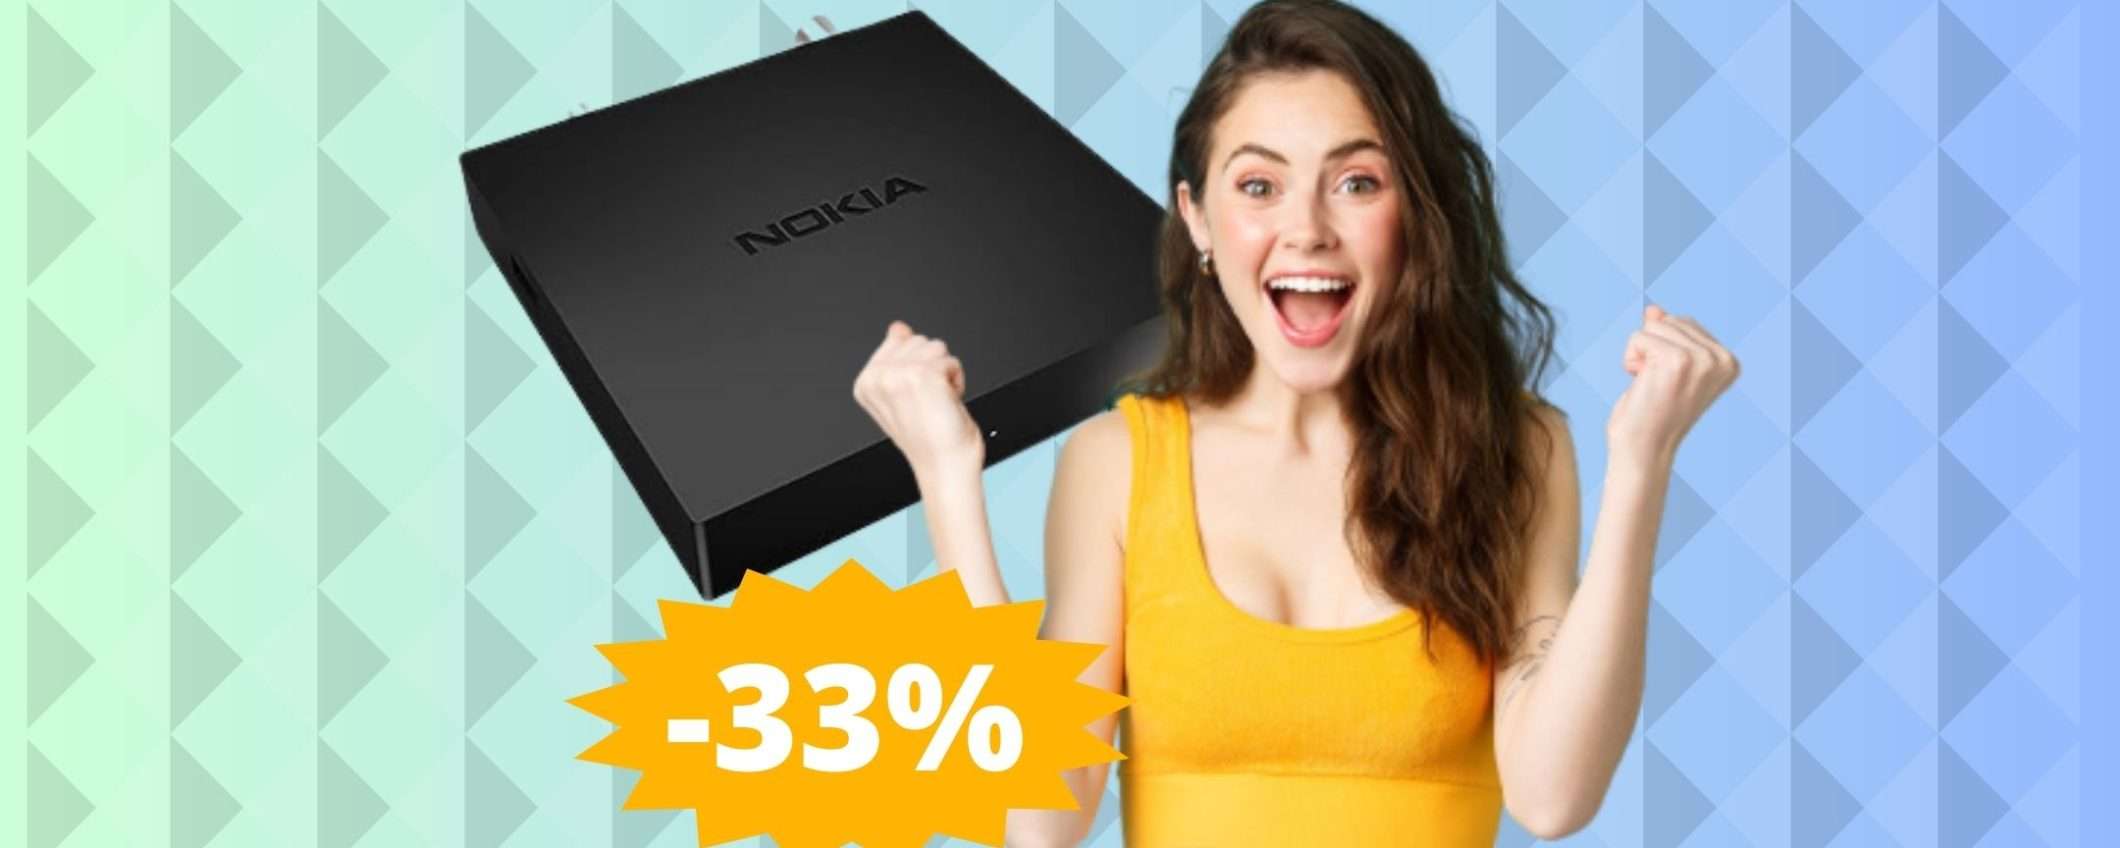 Decoder DVB-T2 Nokia: su Amazon ritorna in grande sconto (-33%)